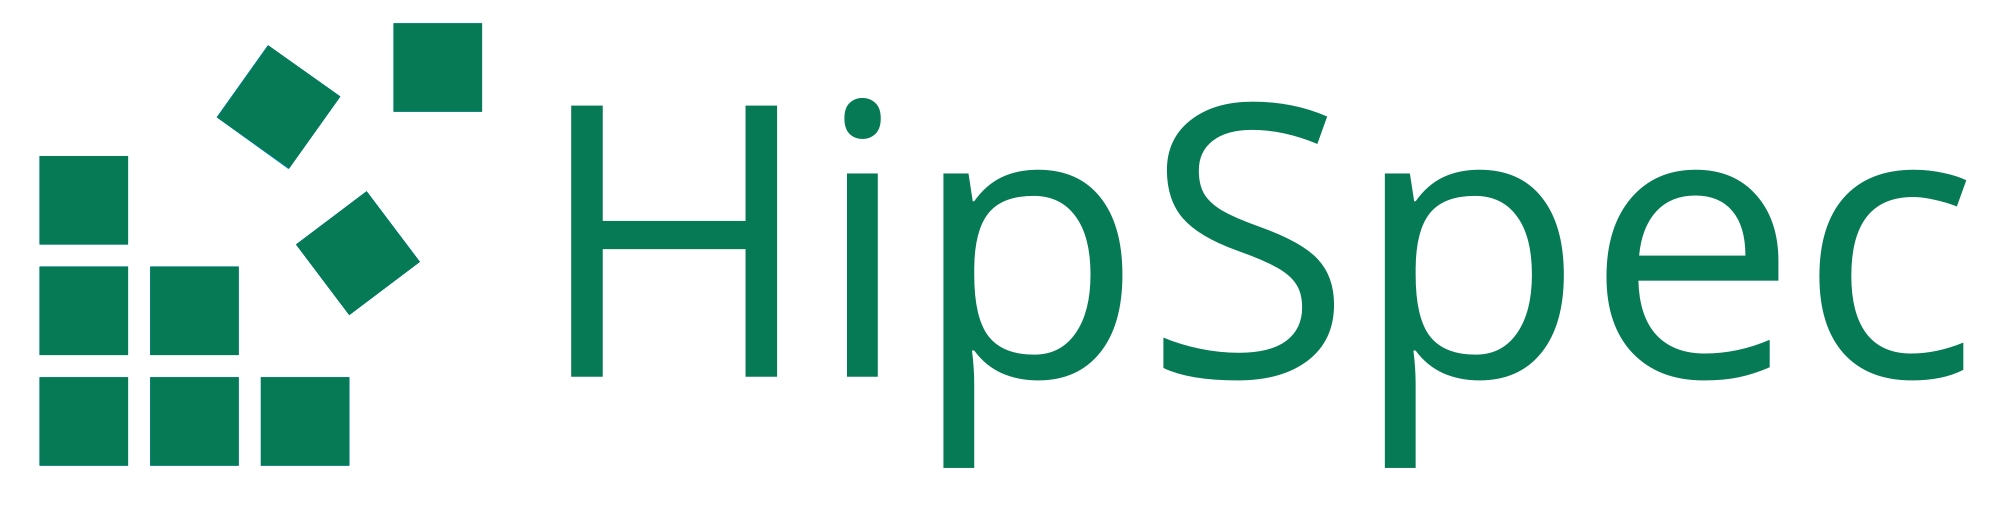 HipSpec logo for Pivotal Tracker integration